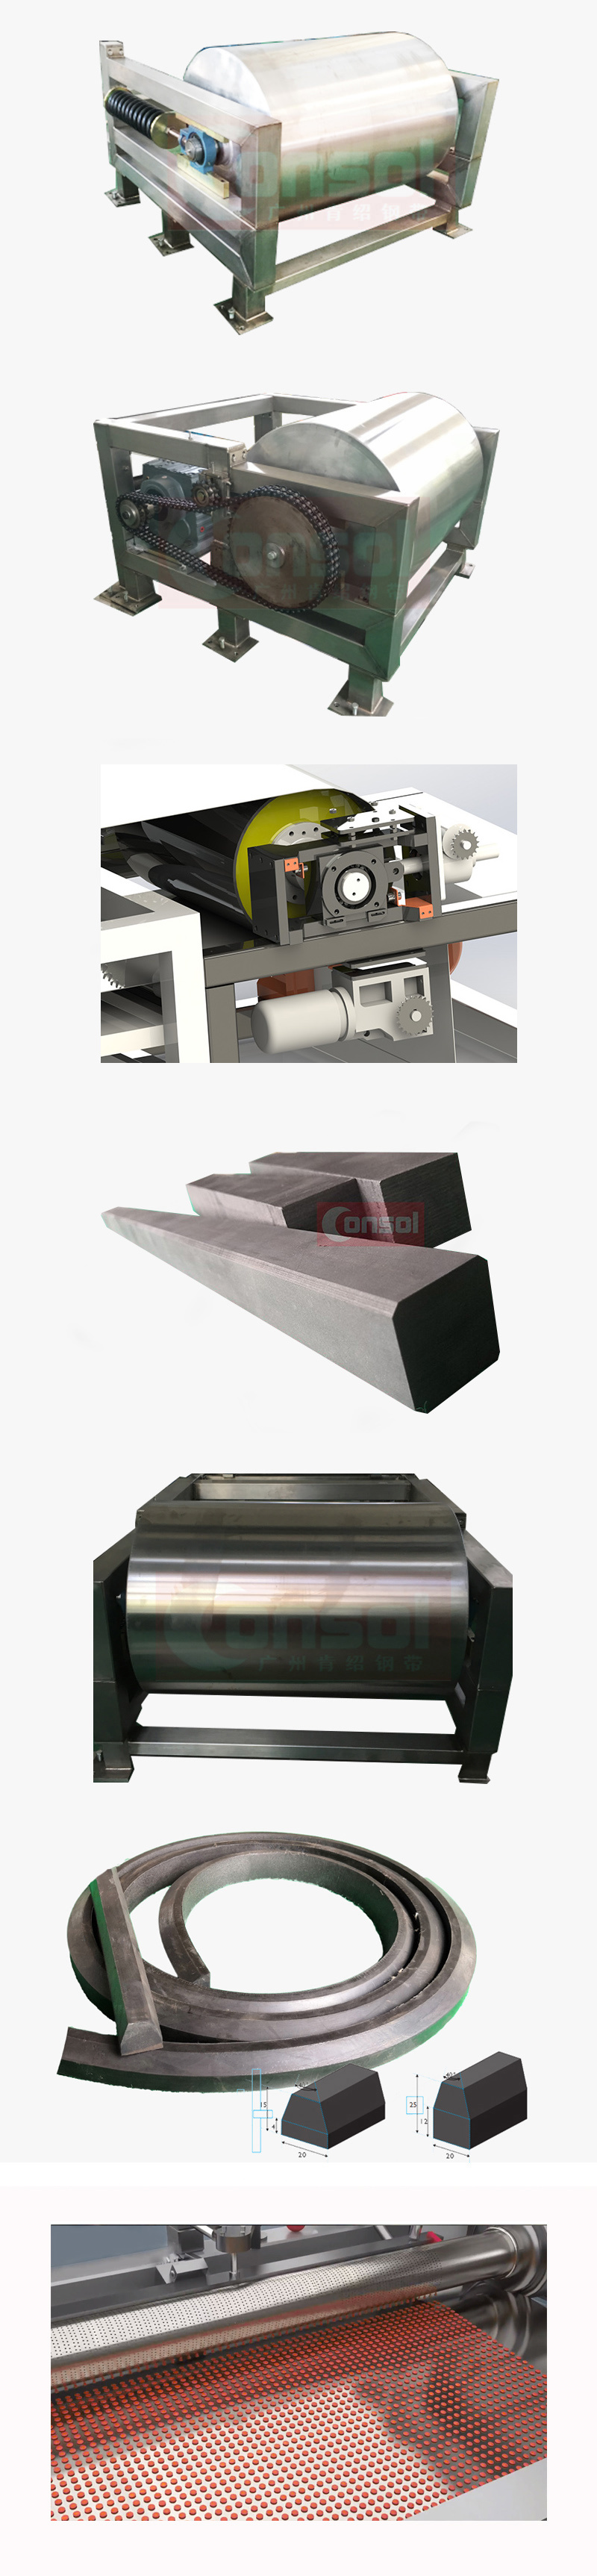 steel belt conveyor system spare parts